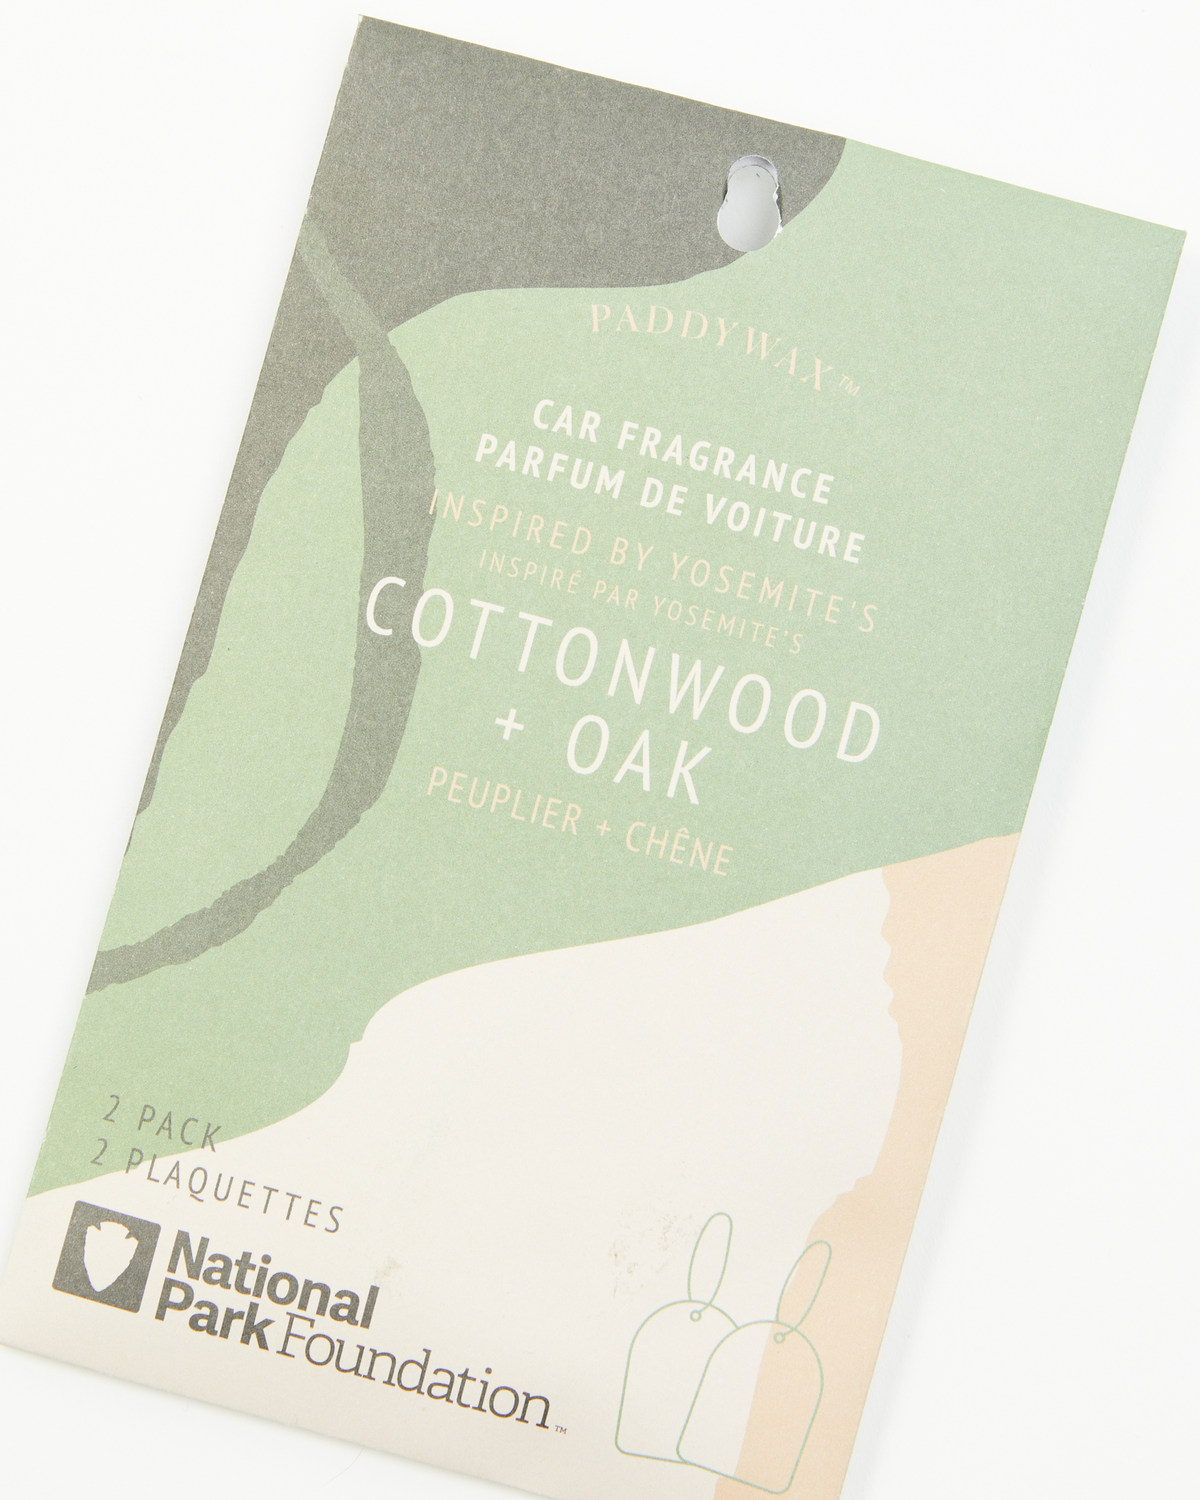 Paddywax Cottonwood + Oak Yosemite Parks Car Fragrance - 2 Pack